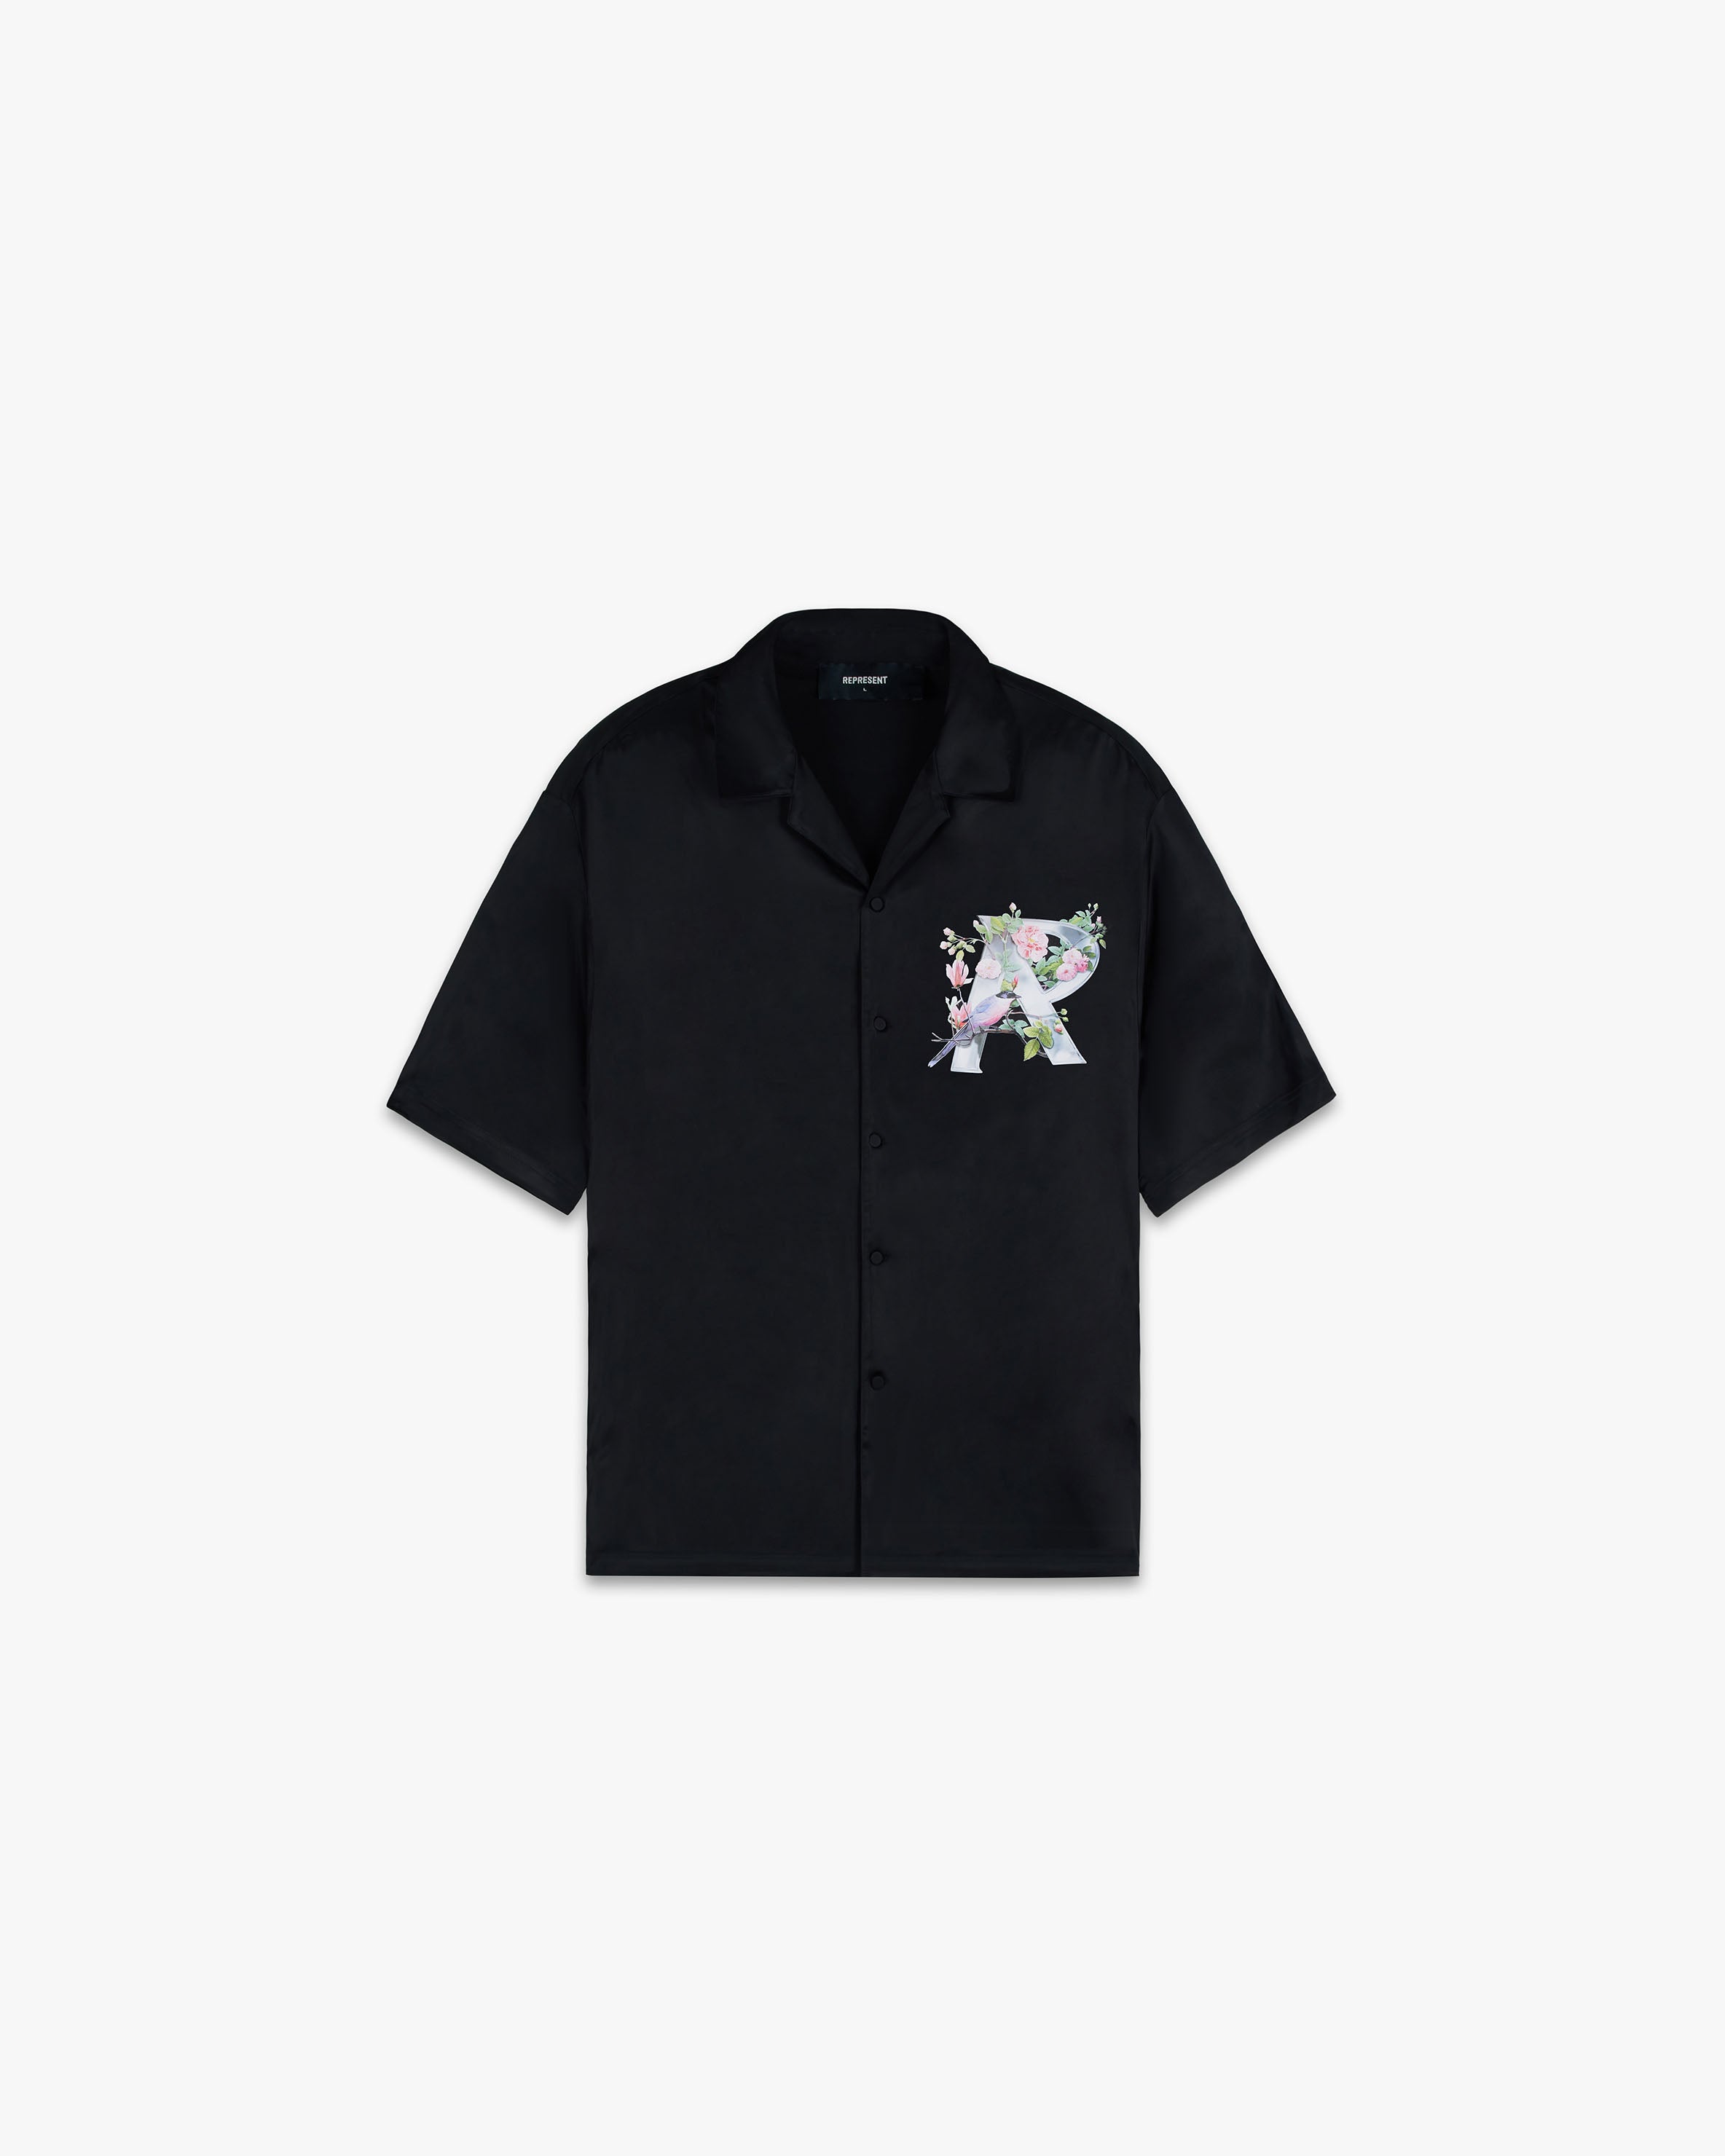 Floral Initial Shirt - Black